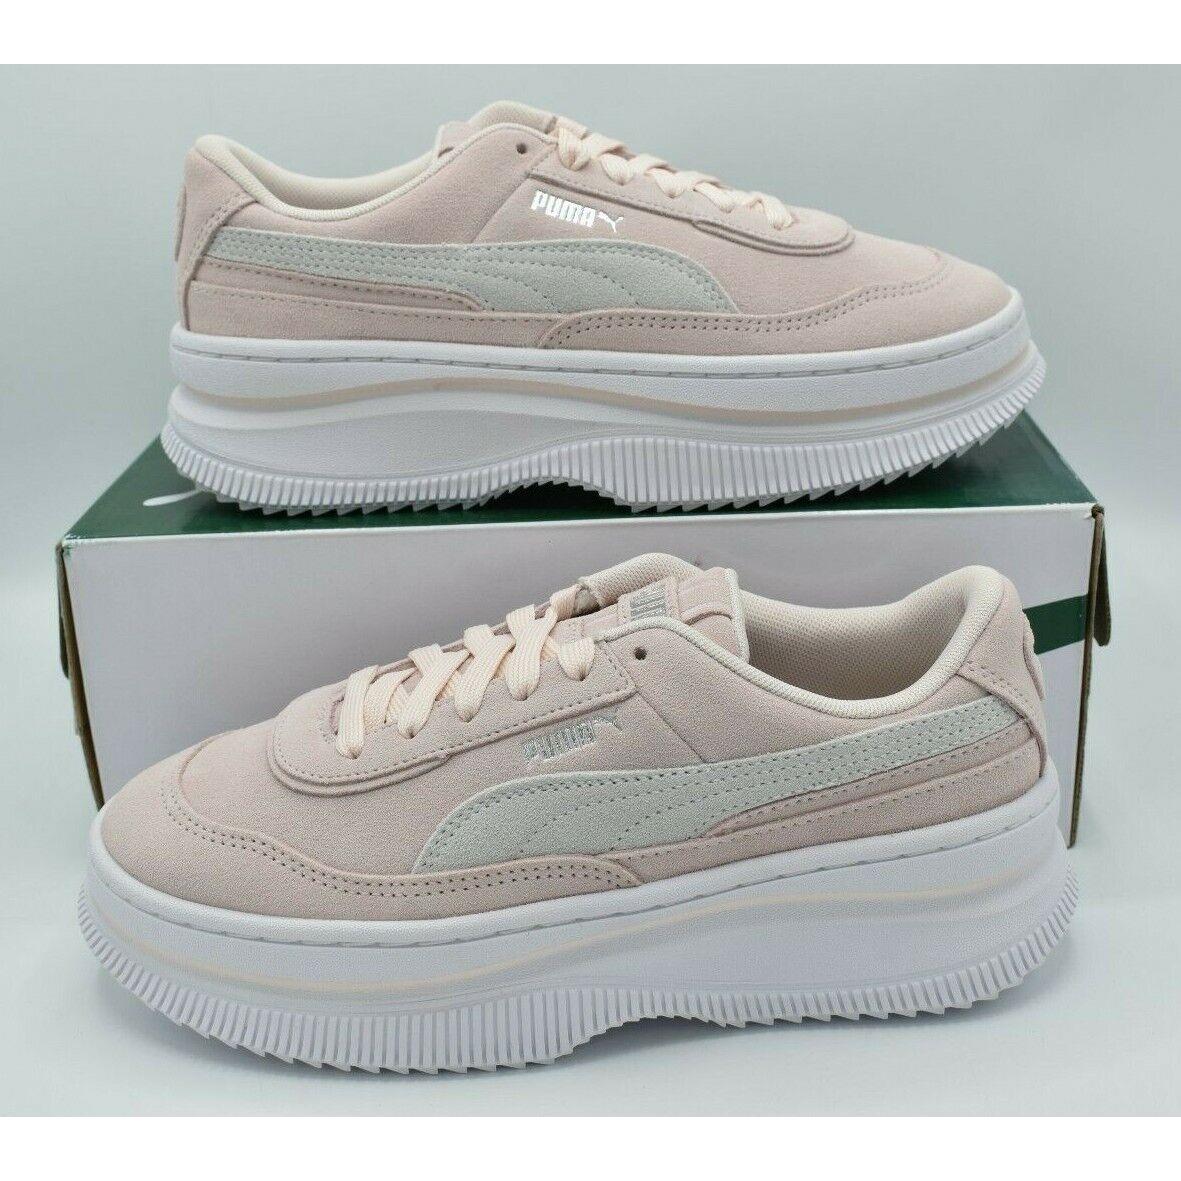 Puma Womens Size 8.5 Deva Suede Casual Pink White Platform Shoes Sneakers